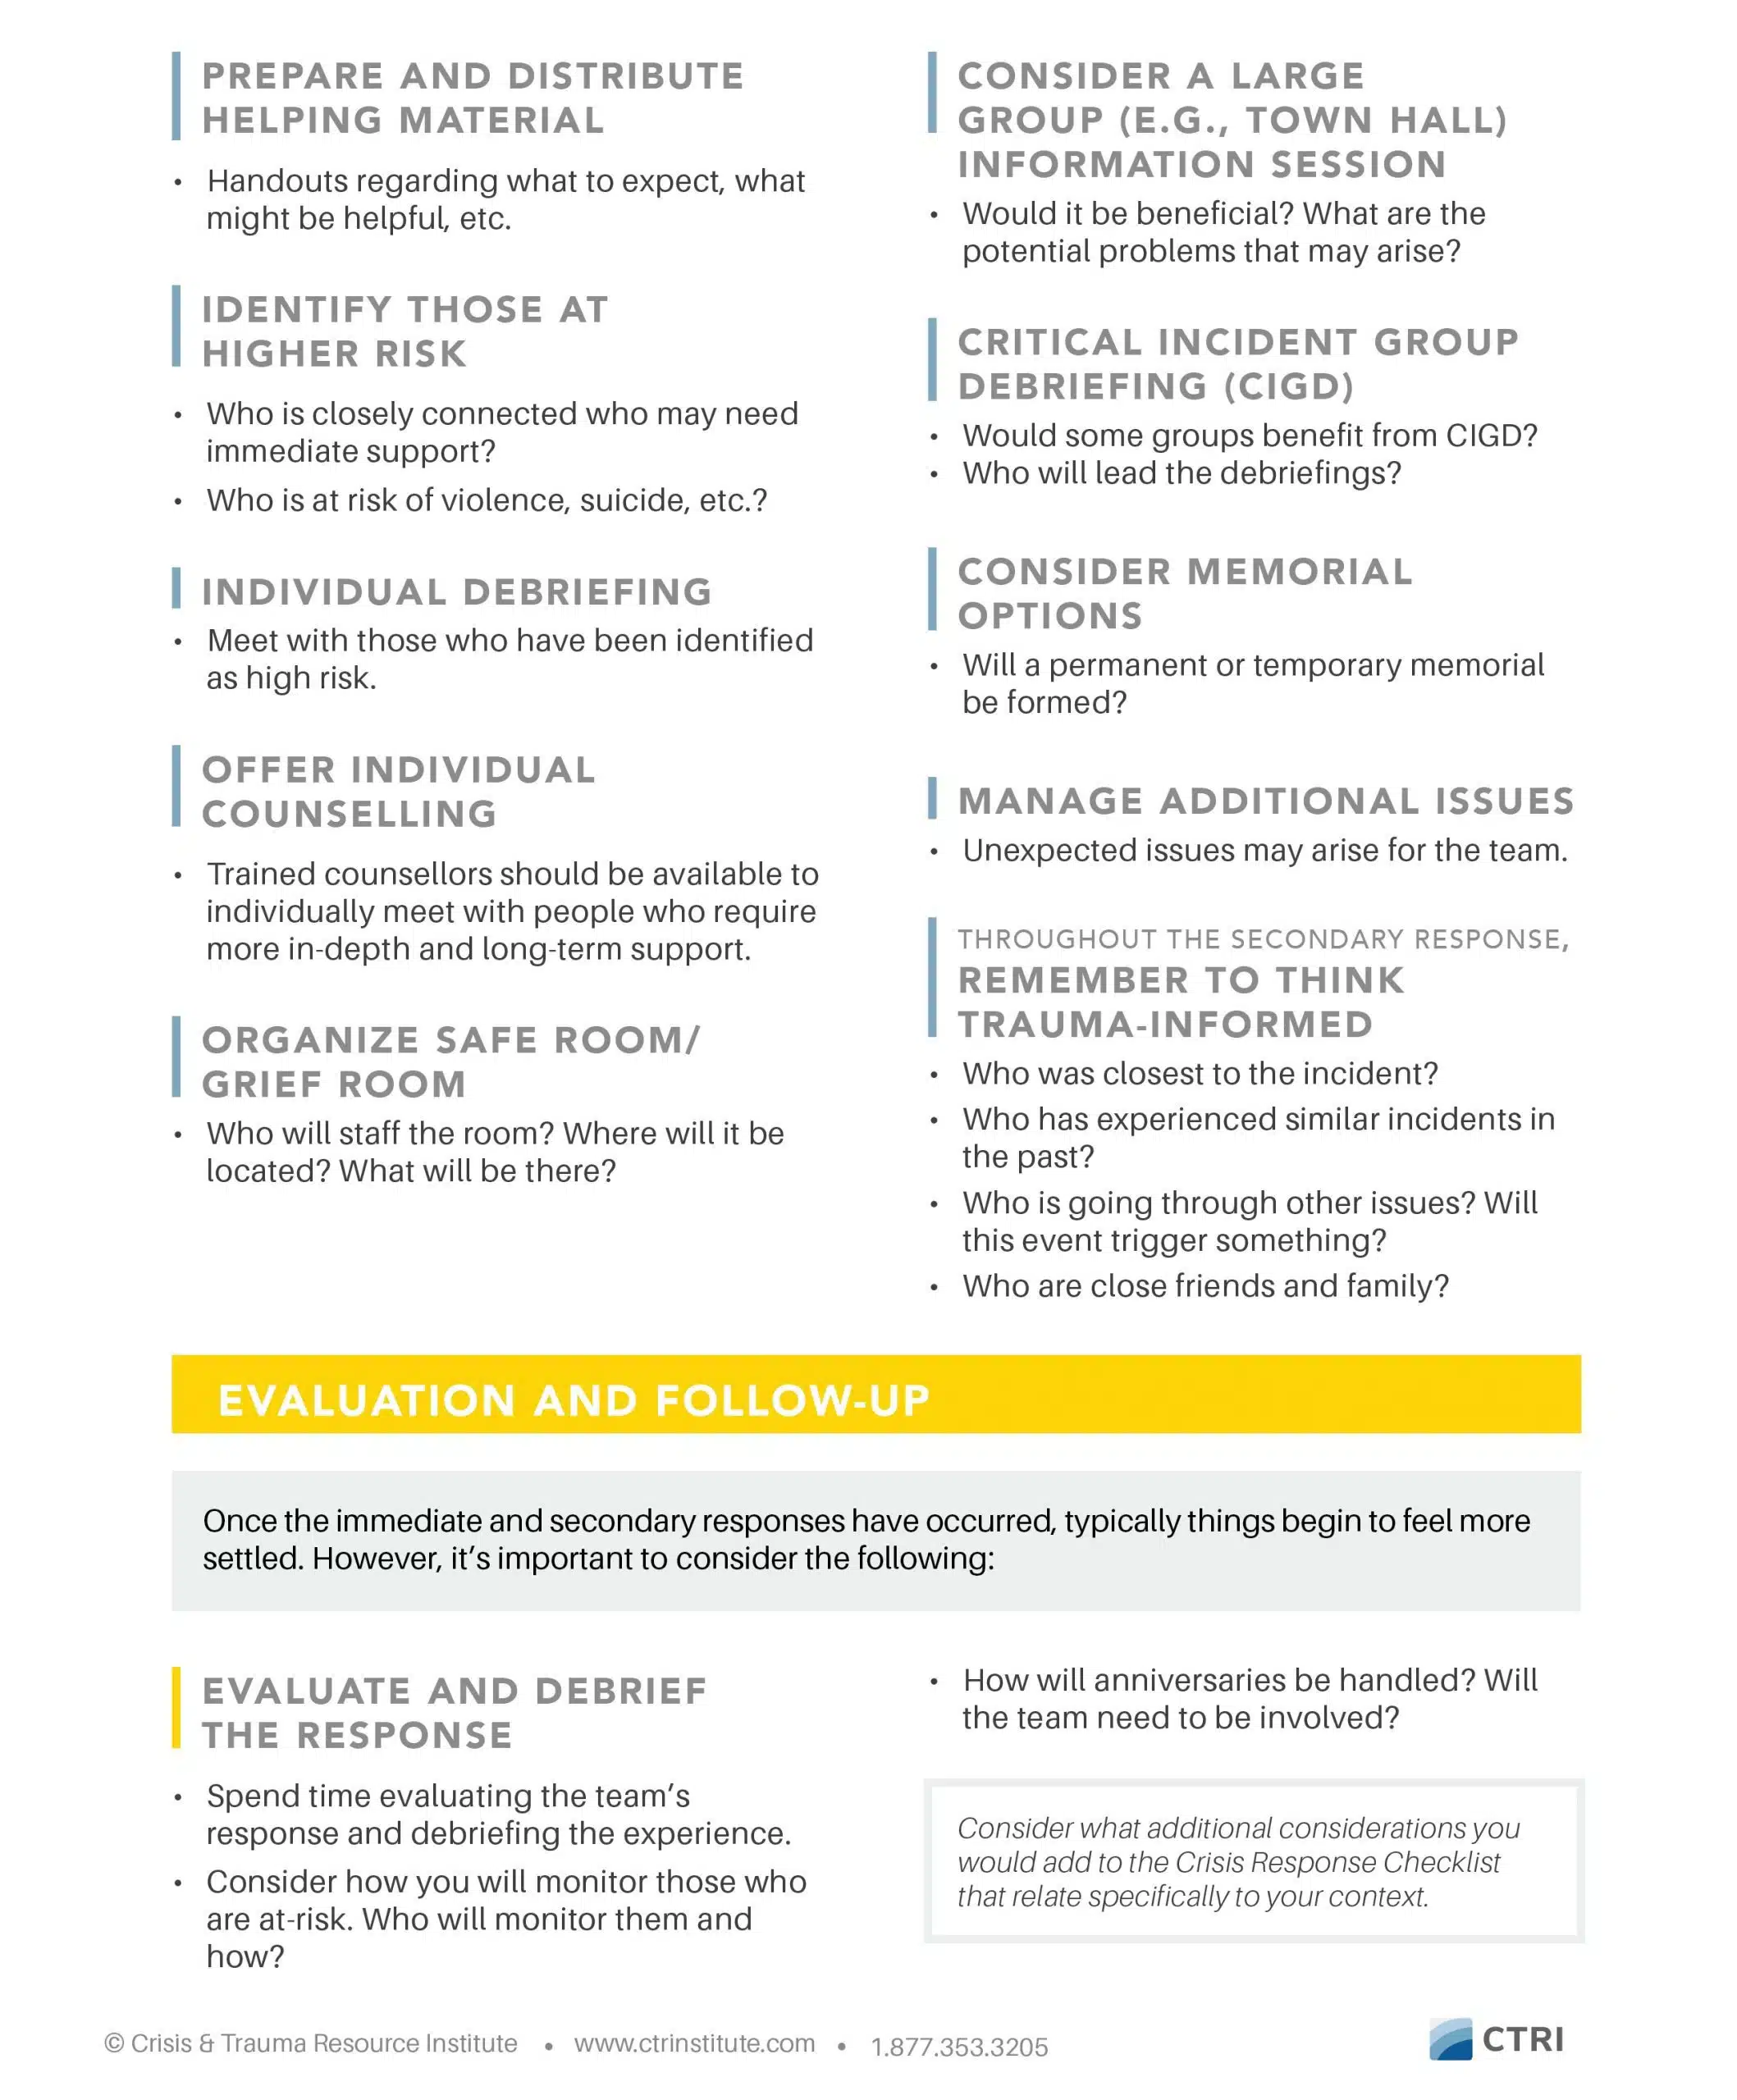 Crisis Response Checklist Printable handout page 3 image